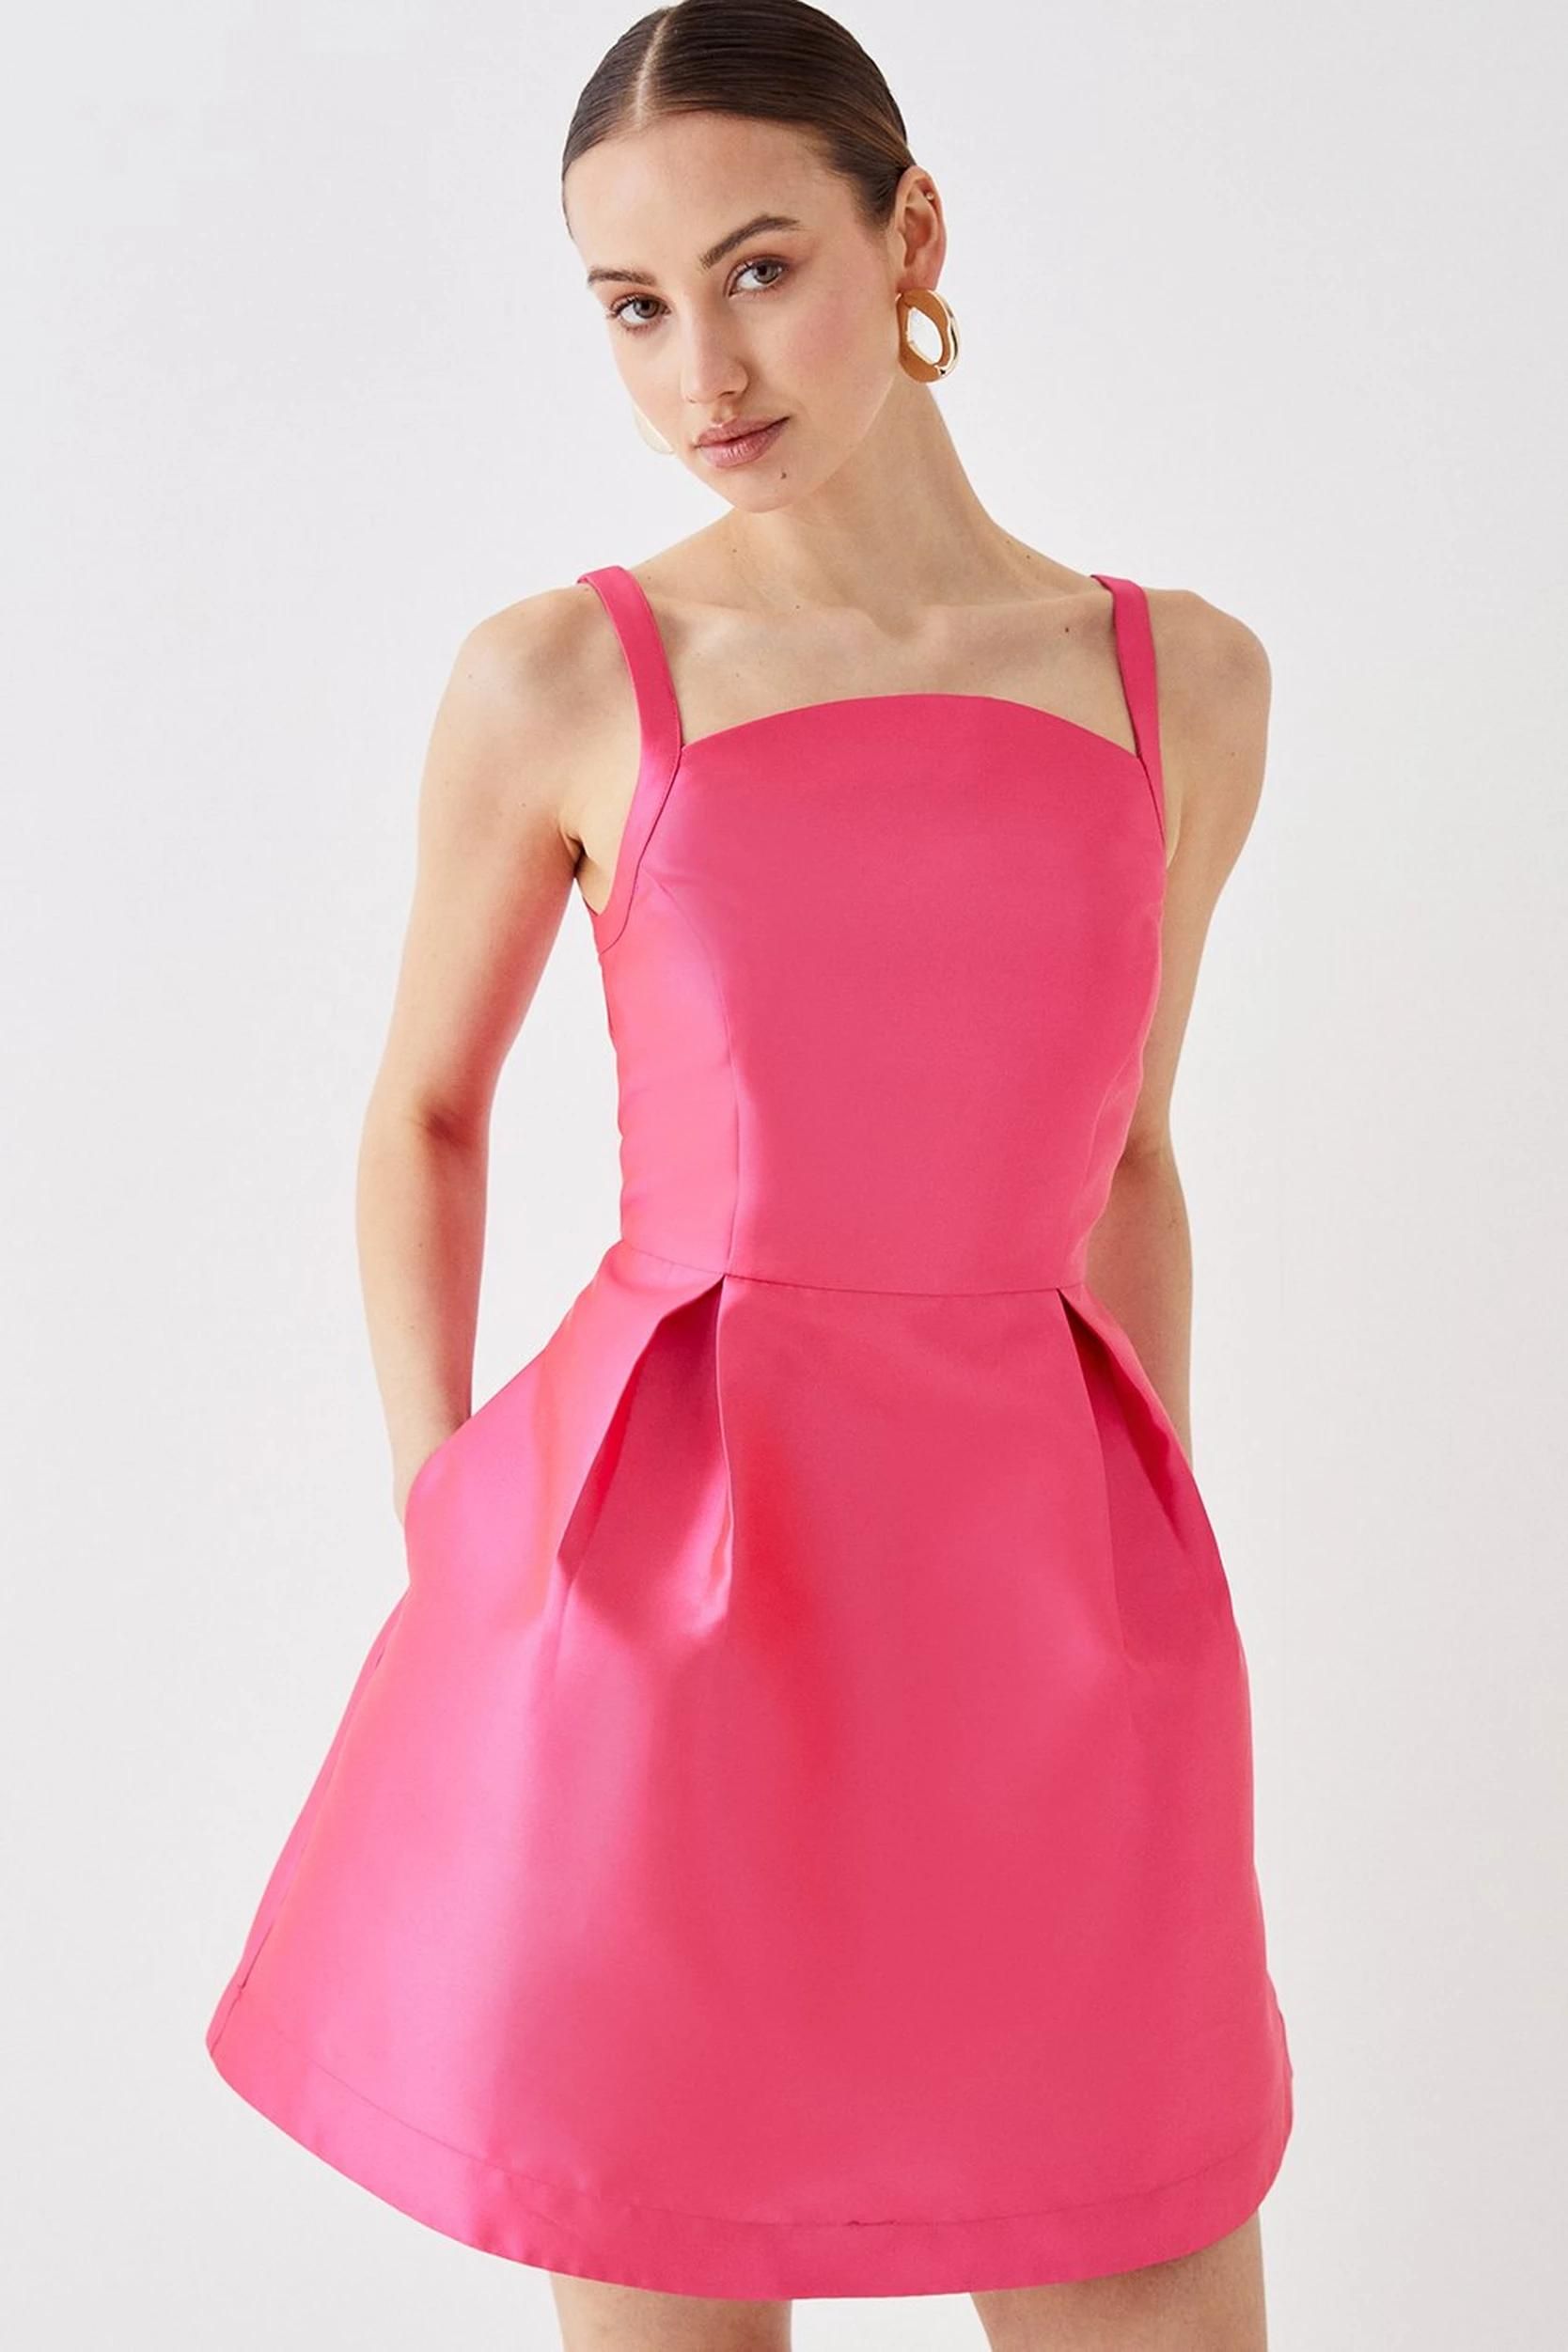 pink barbie dress